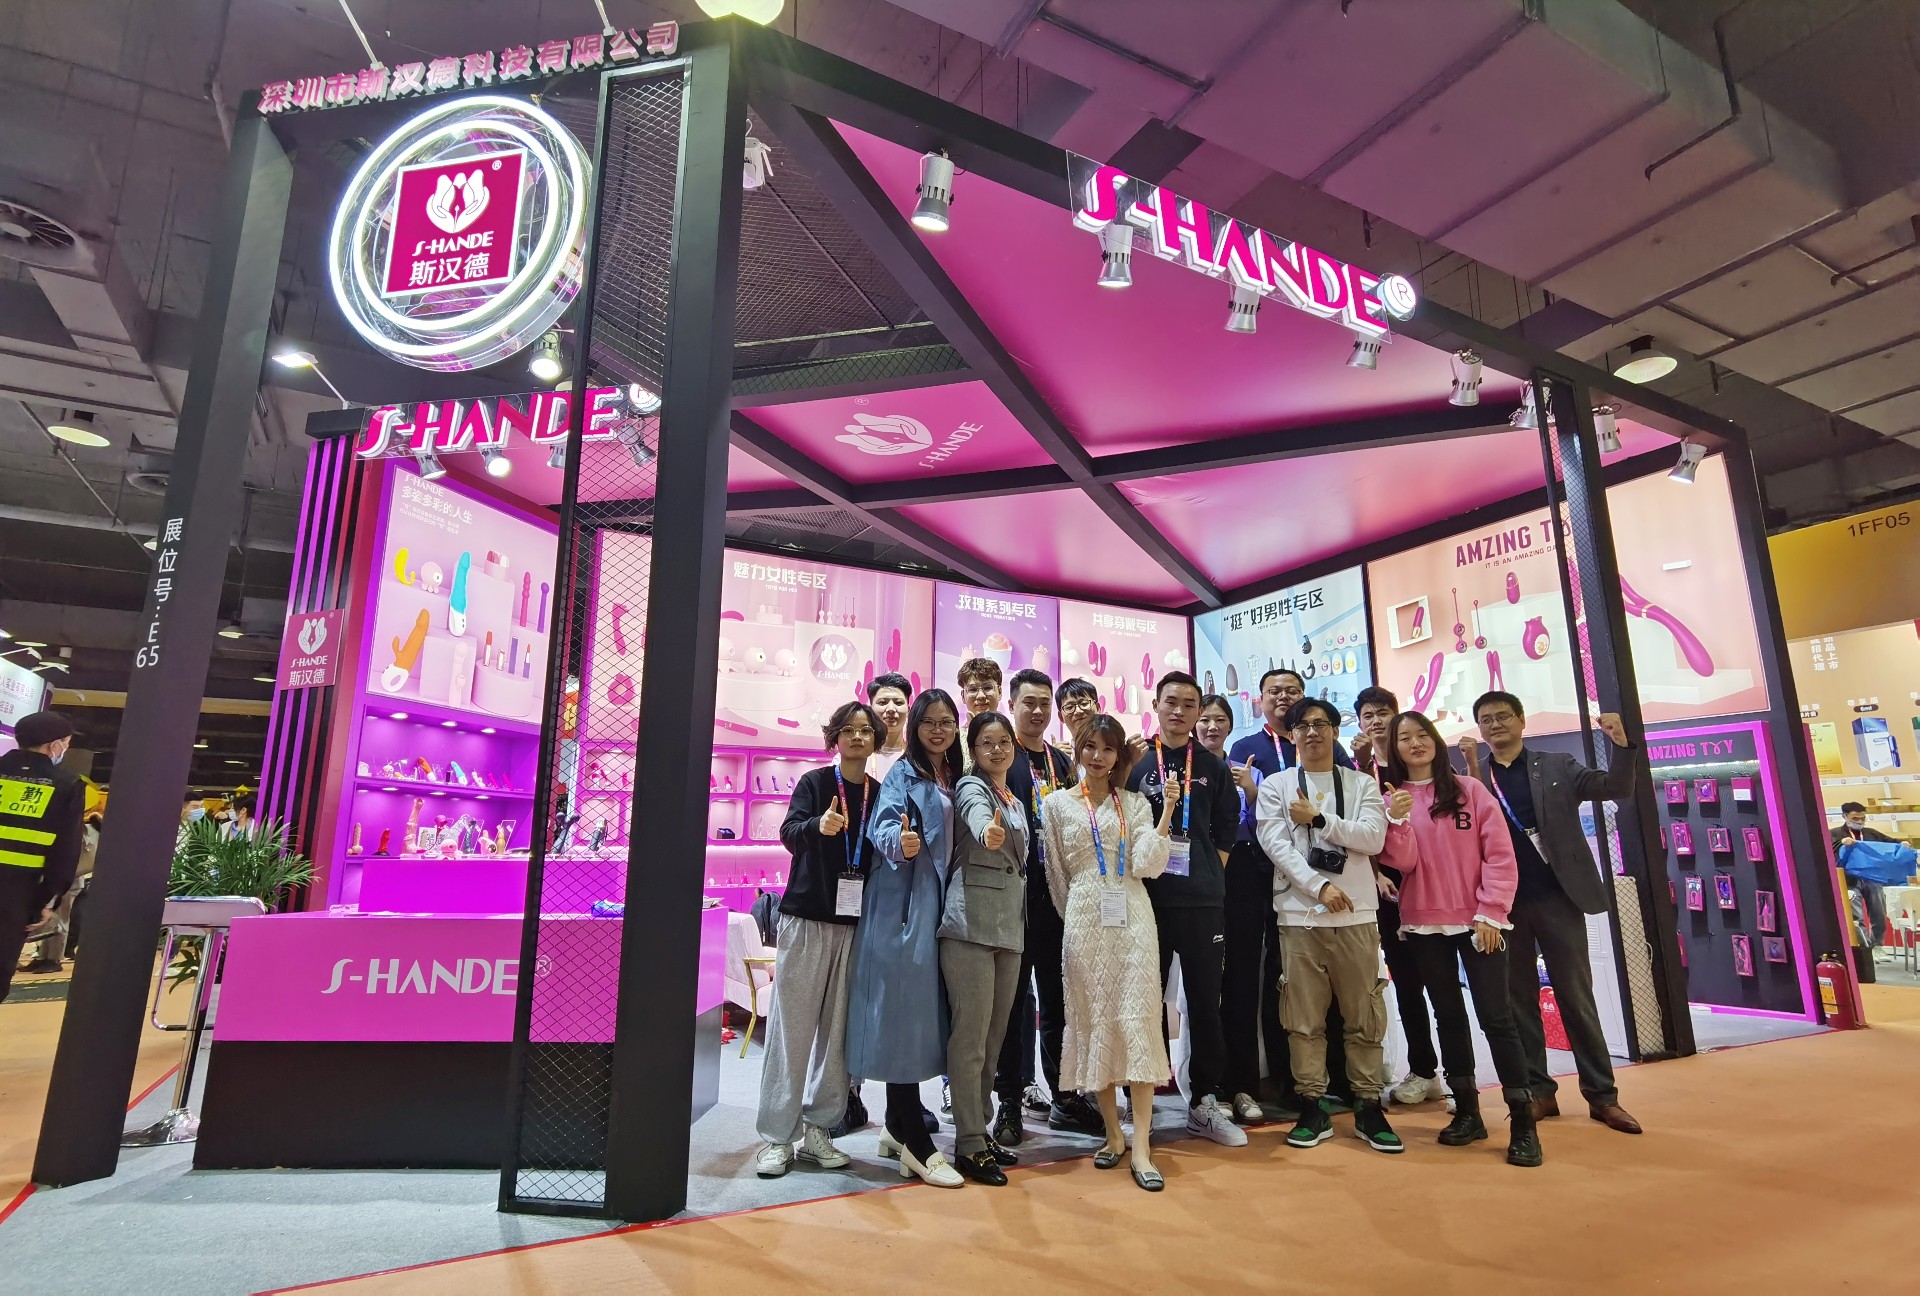 S-HANDE | 2021上海国际成人展圆满落幕